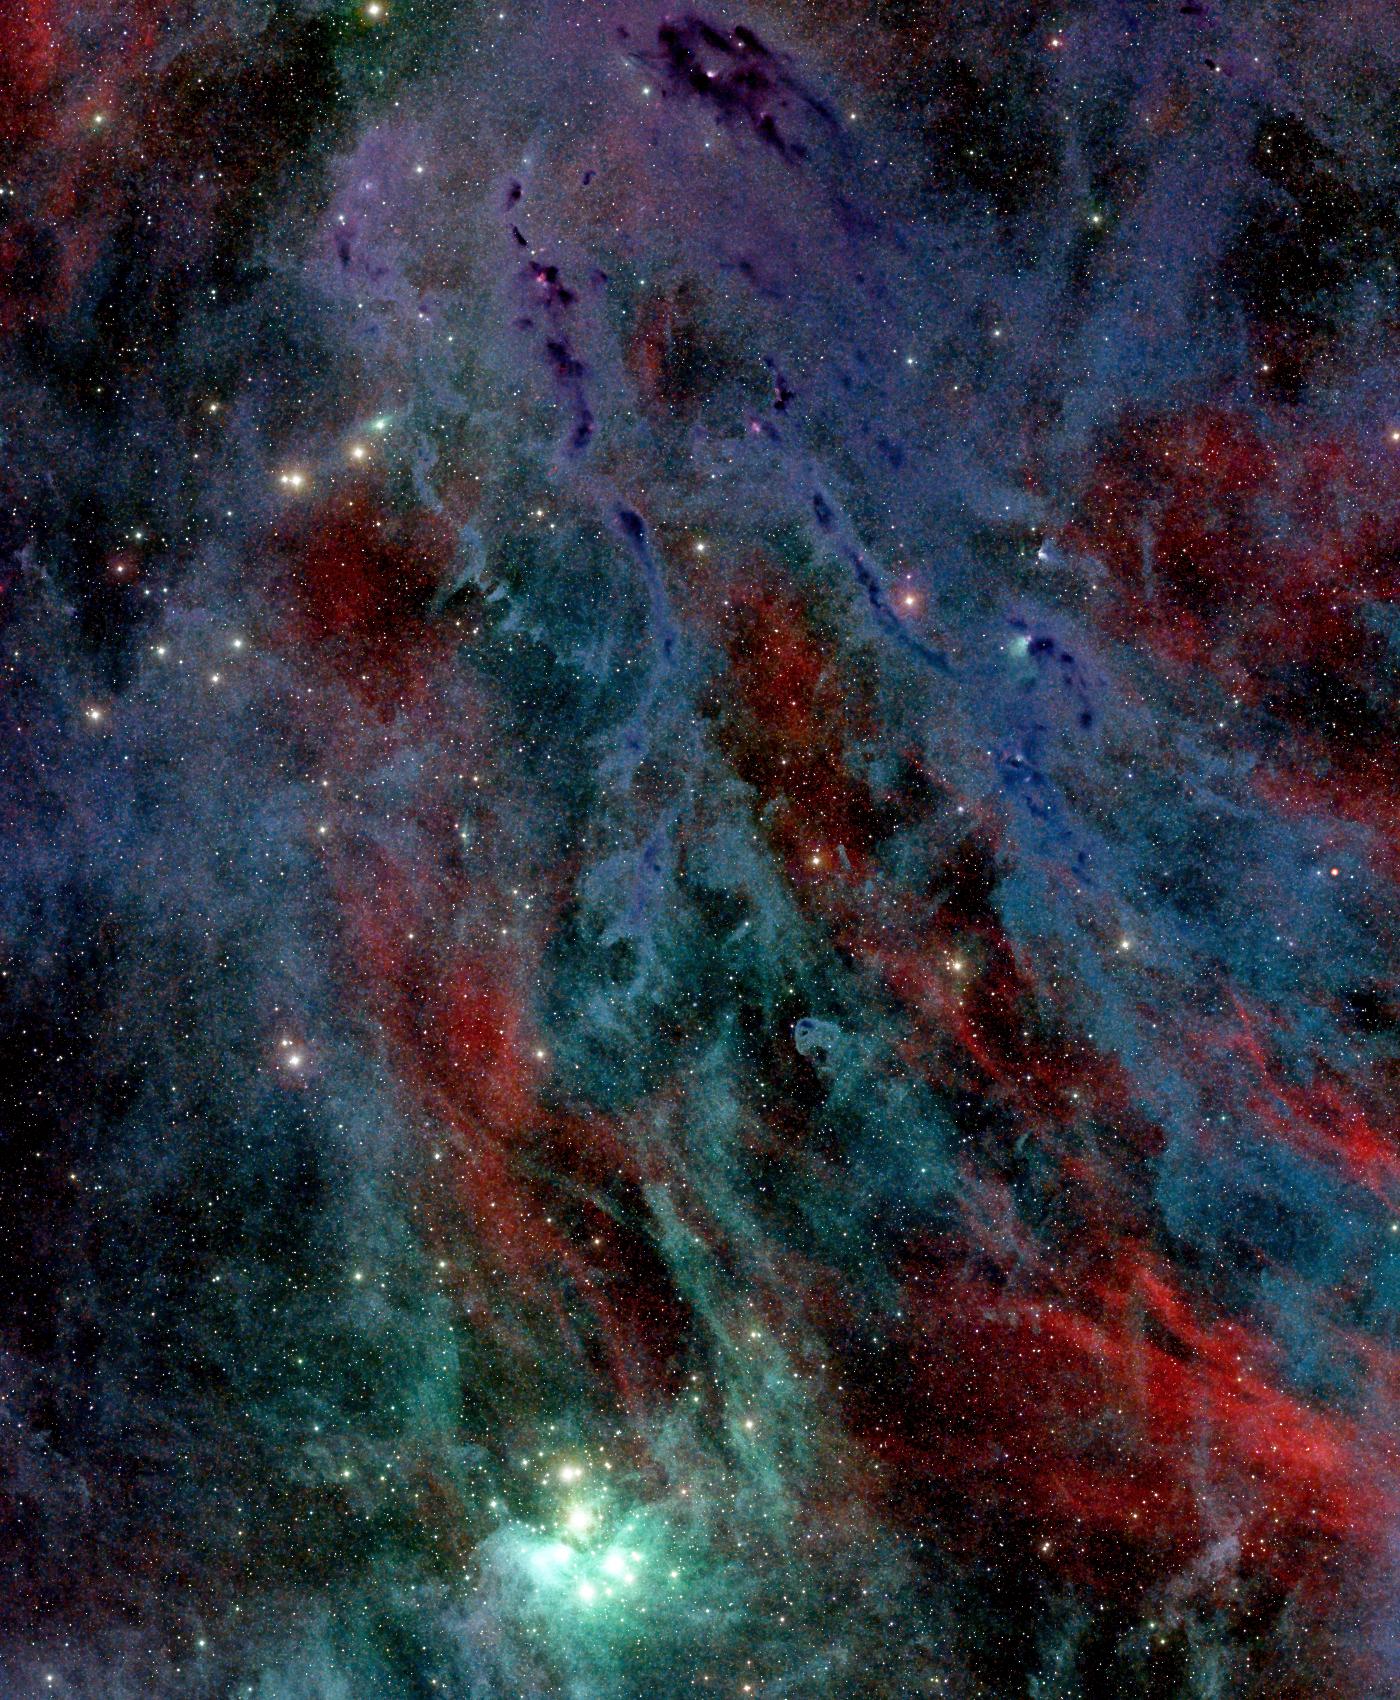 Taurus Molecular Cloud and Pleiades